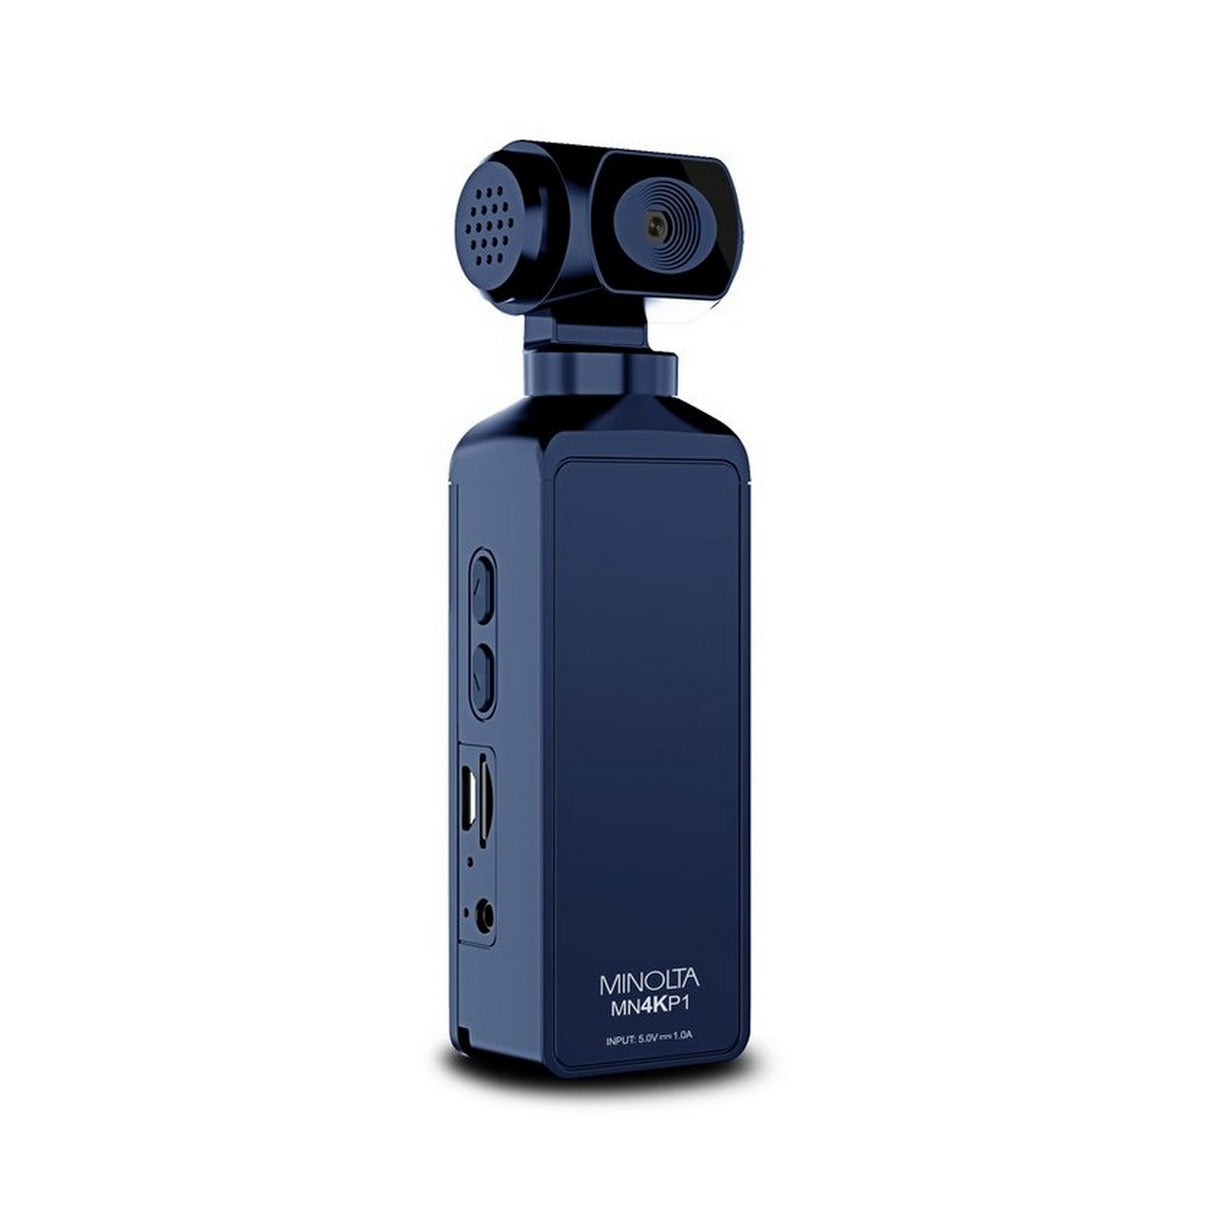 Minolta MN4KP1 Waterproof 4K Ultra HD Pocket Camcorder with WiFi, Blue